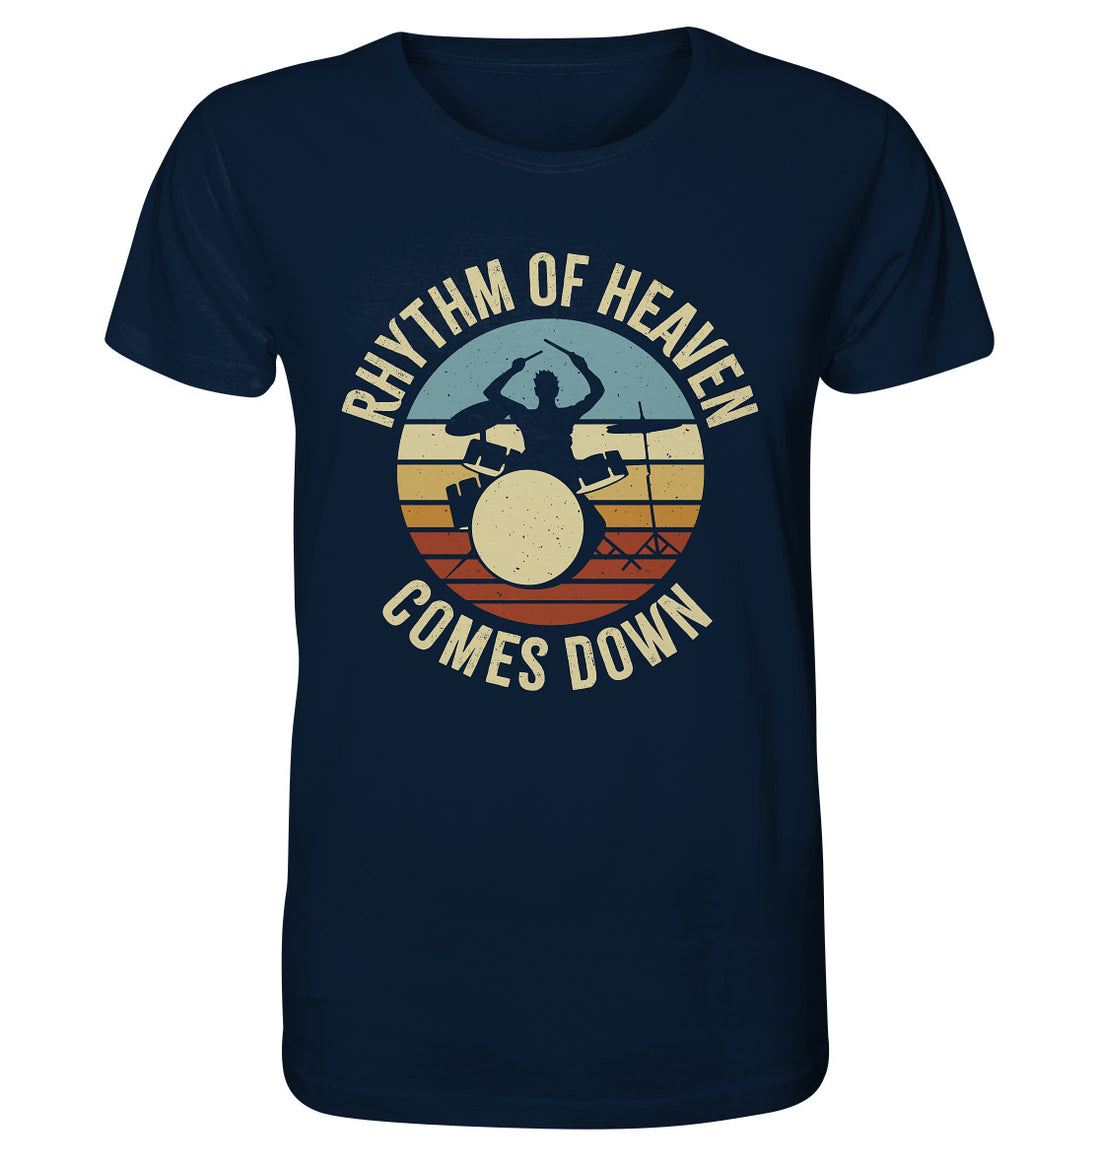 Rhythm of heaven (2) - Organic Shirt